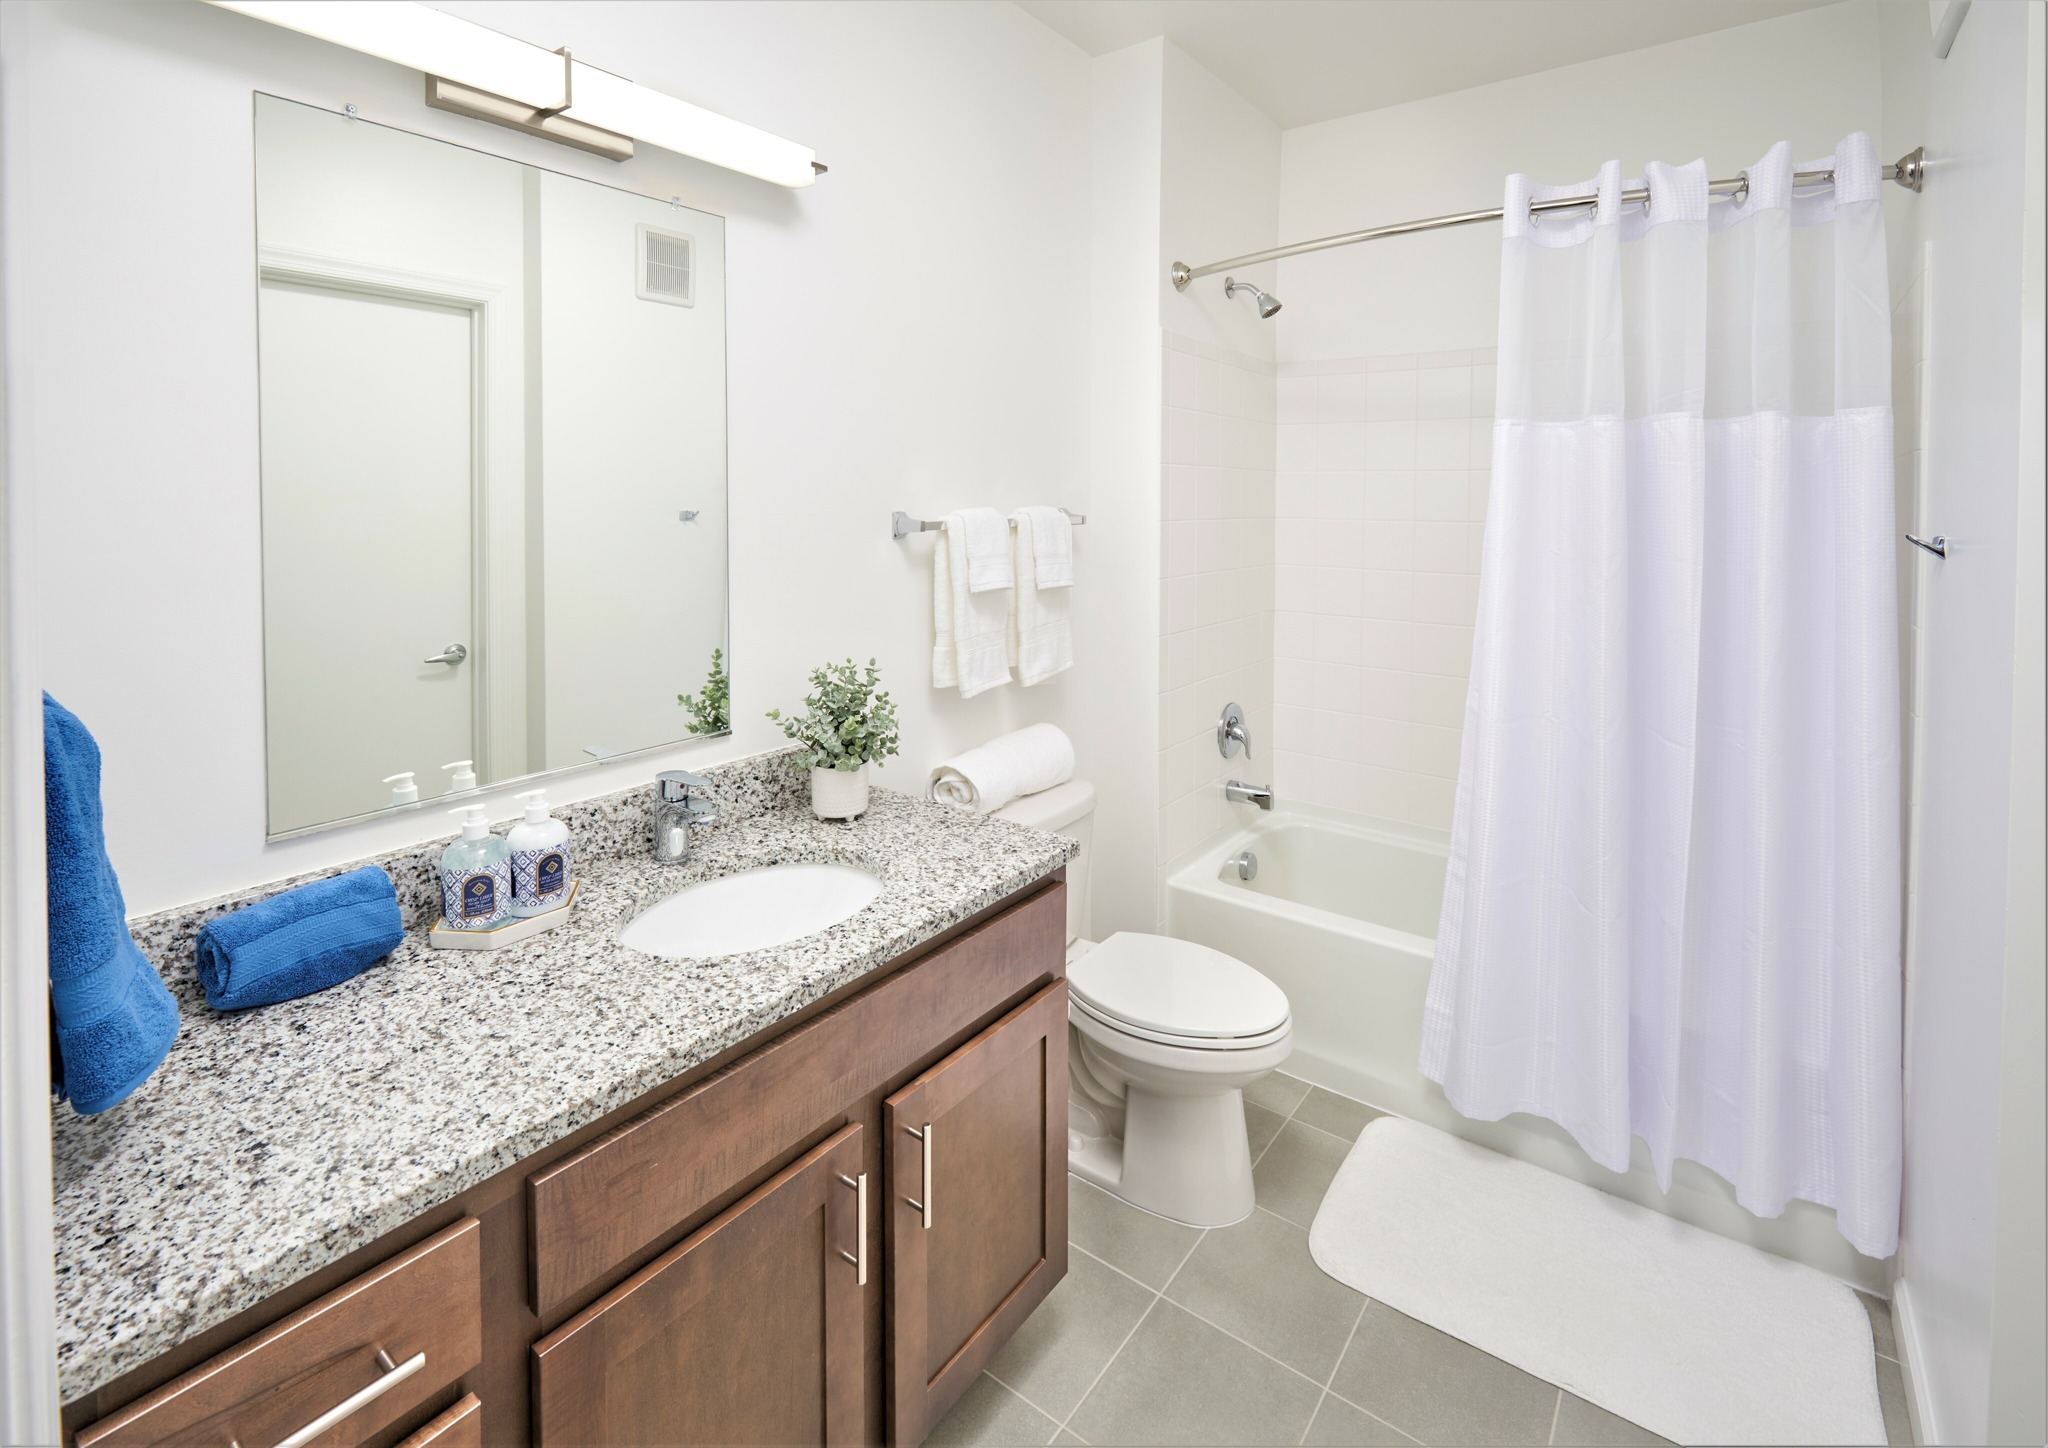 Image of Model Apartment Bathroom | Ovation at Arrowbrook | Affordable Herndon VA Apartments